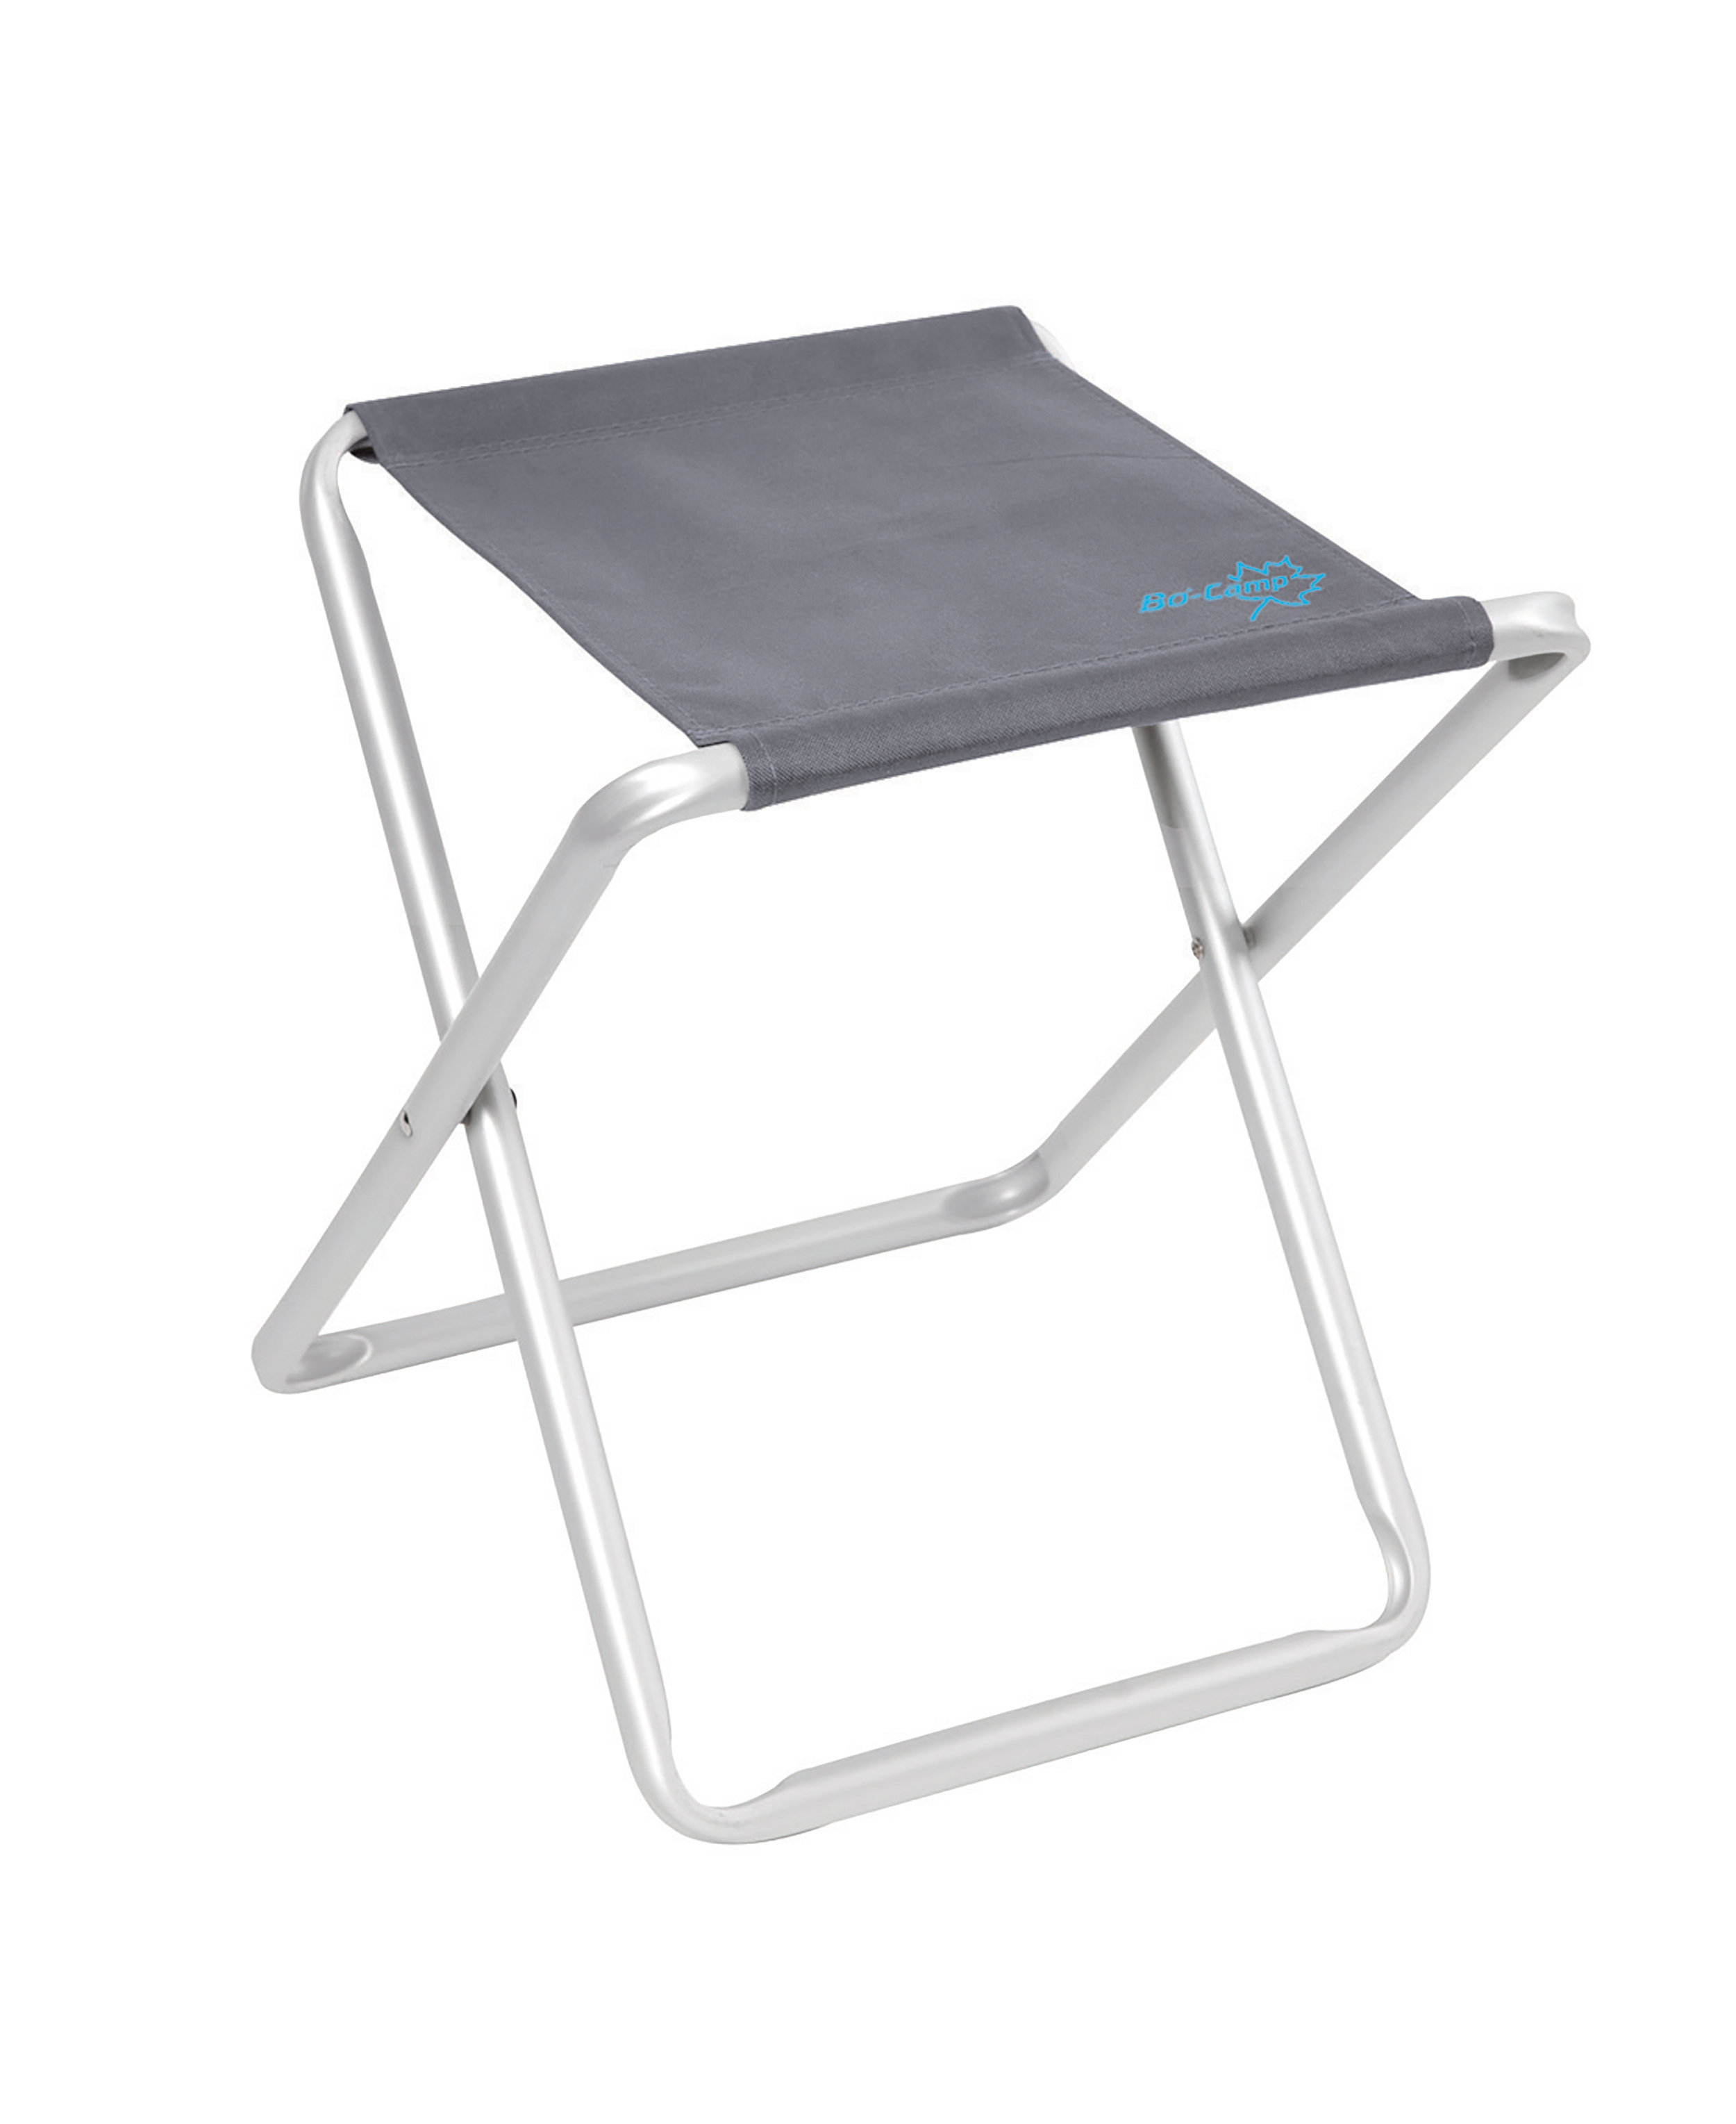 craftsbury folding camping stool